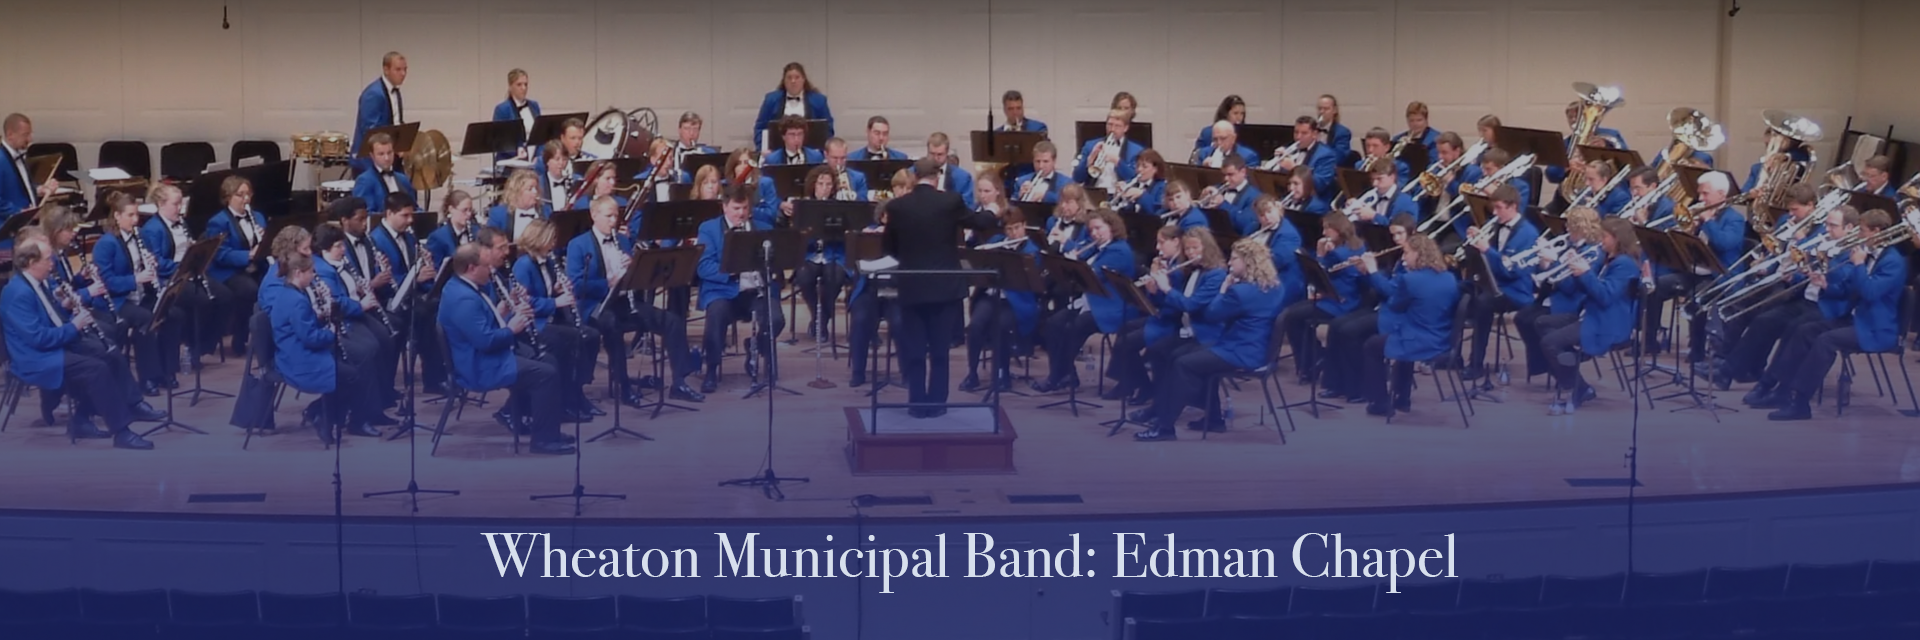 Wheaton Municipal Band: Showcase! Edman Chapel Spectacular